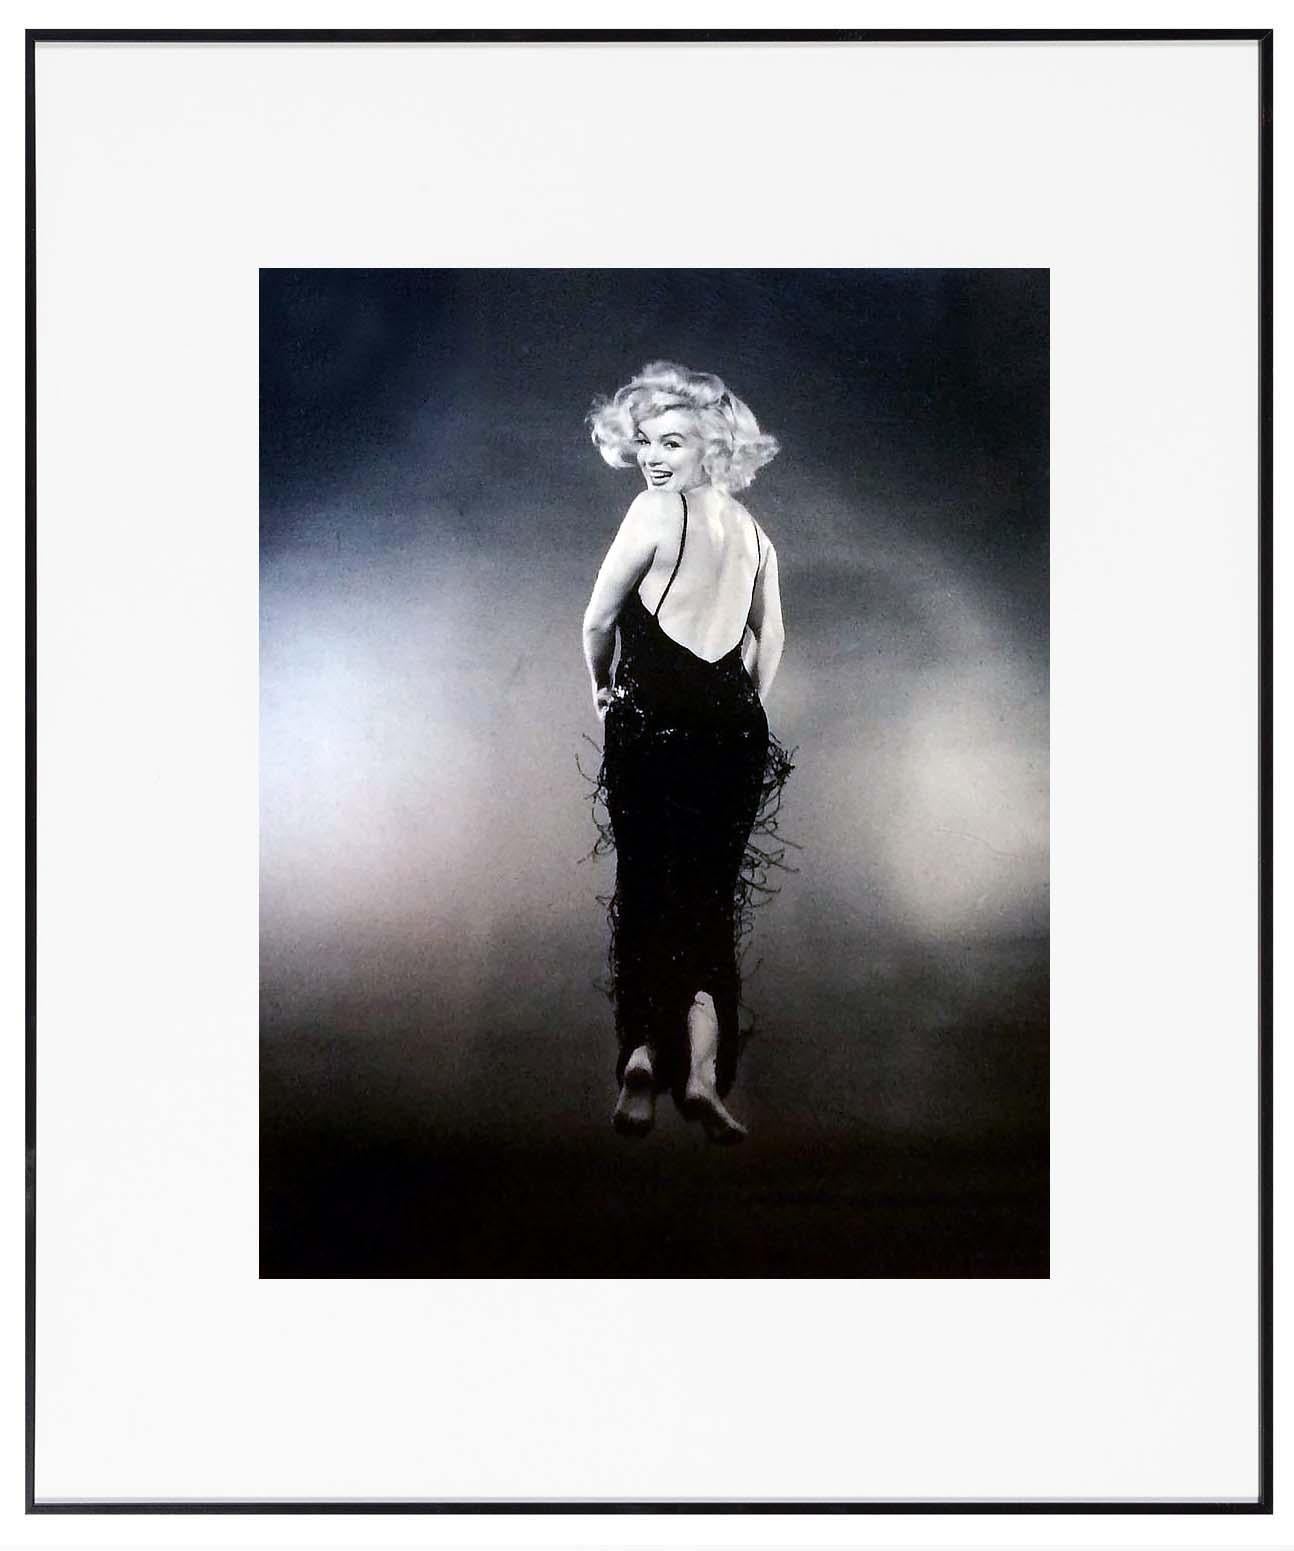 Philippe Halsman Portrait Photograph - Phillipe Halsma Marilyn Monroe Jumping Photograph Black and White (1956/1981)